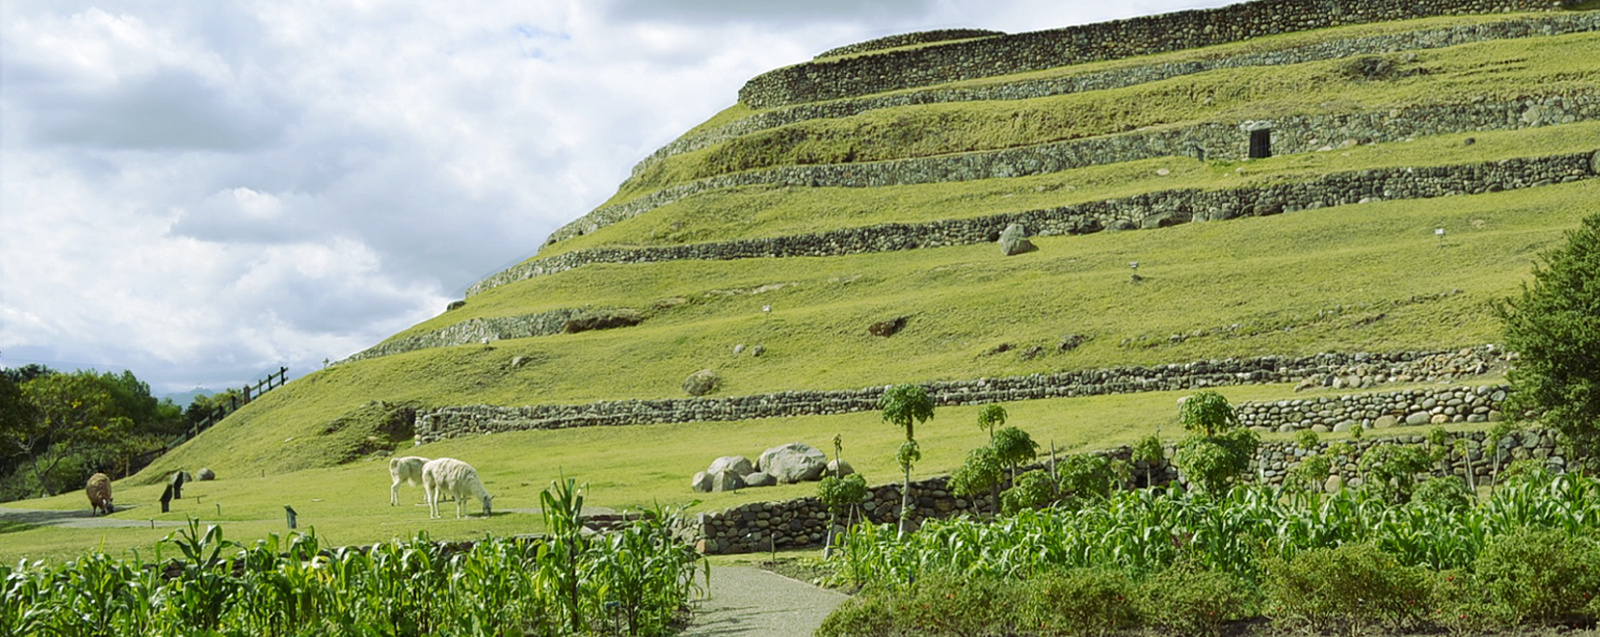 pumapungo ruins in cuenca ecuador